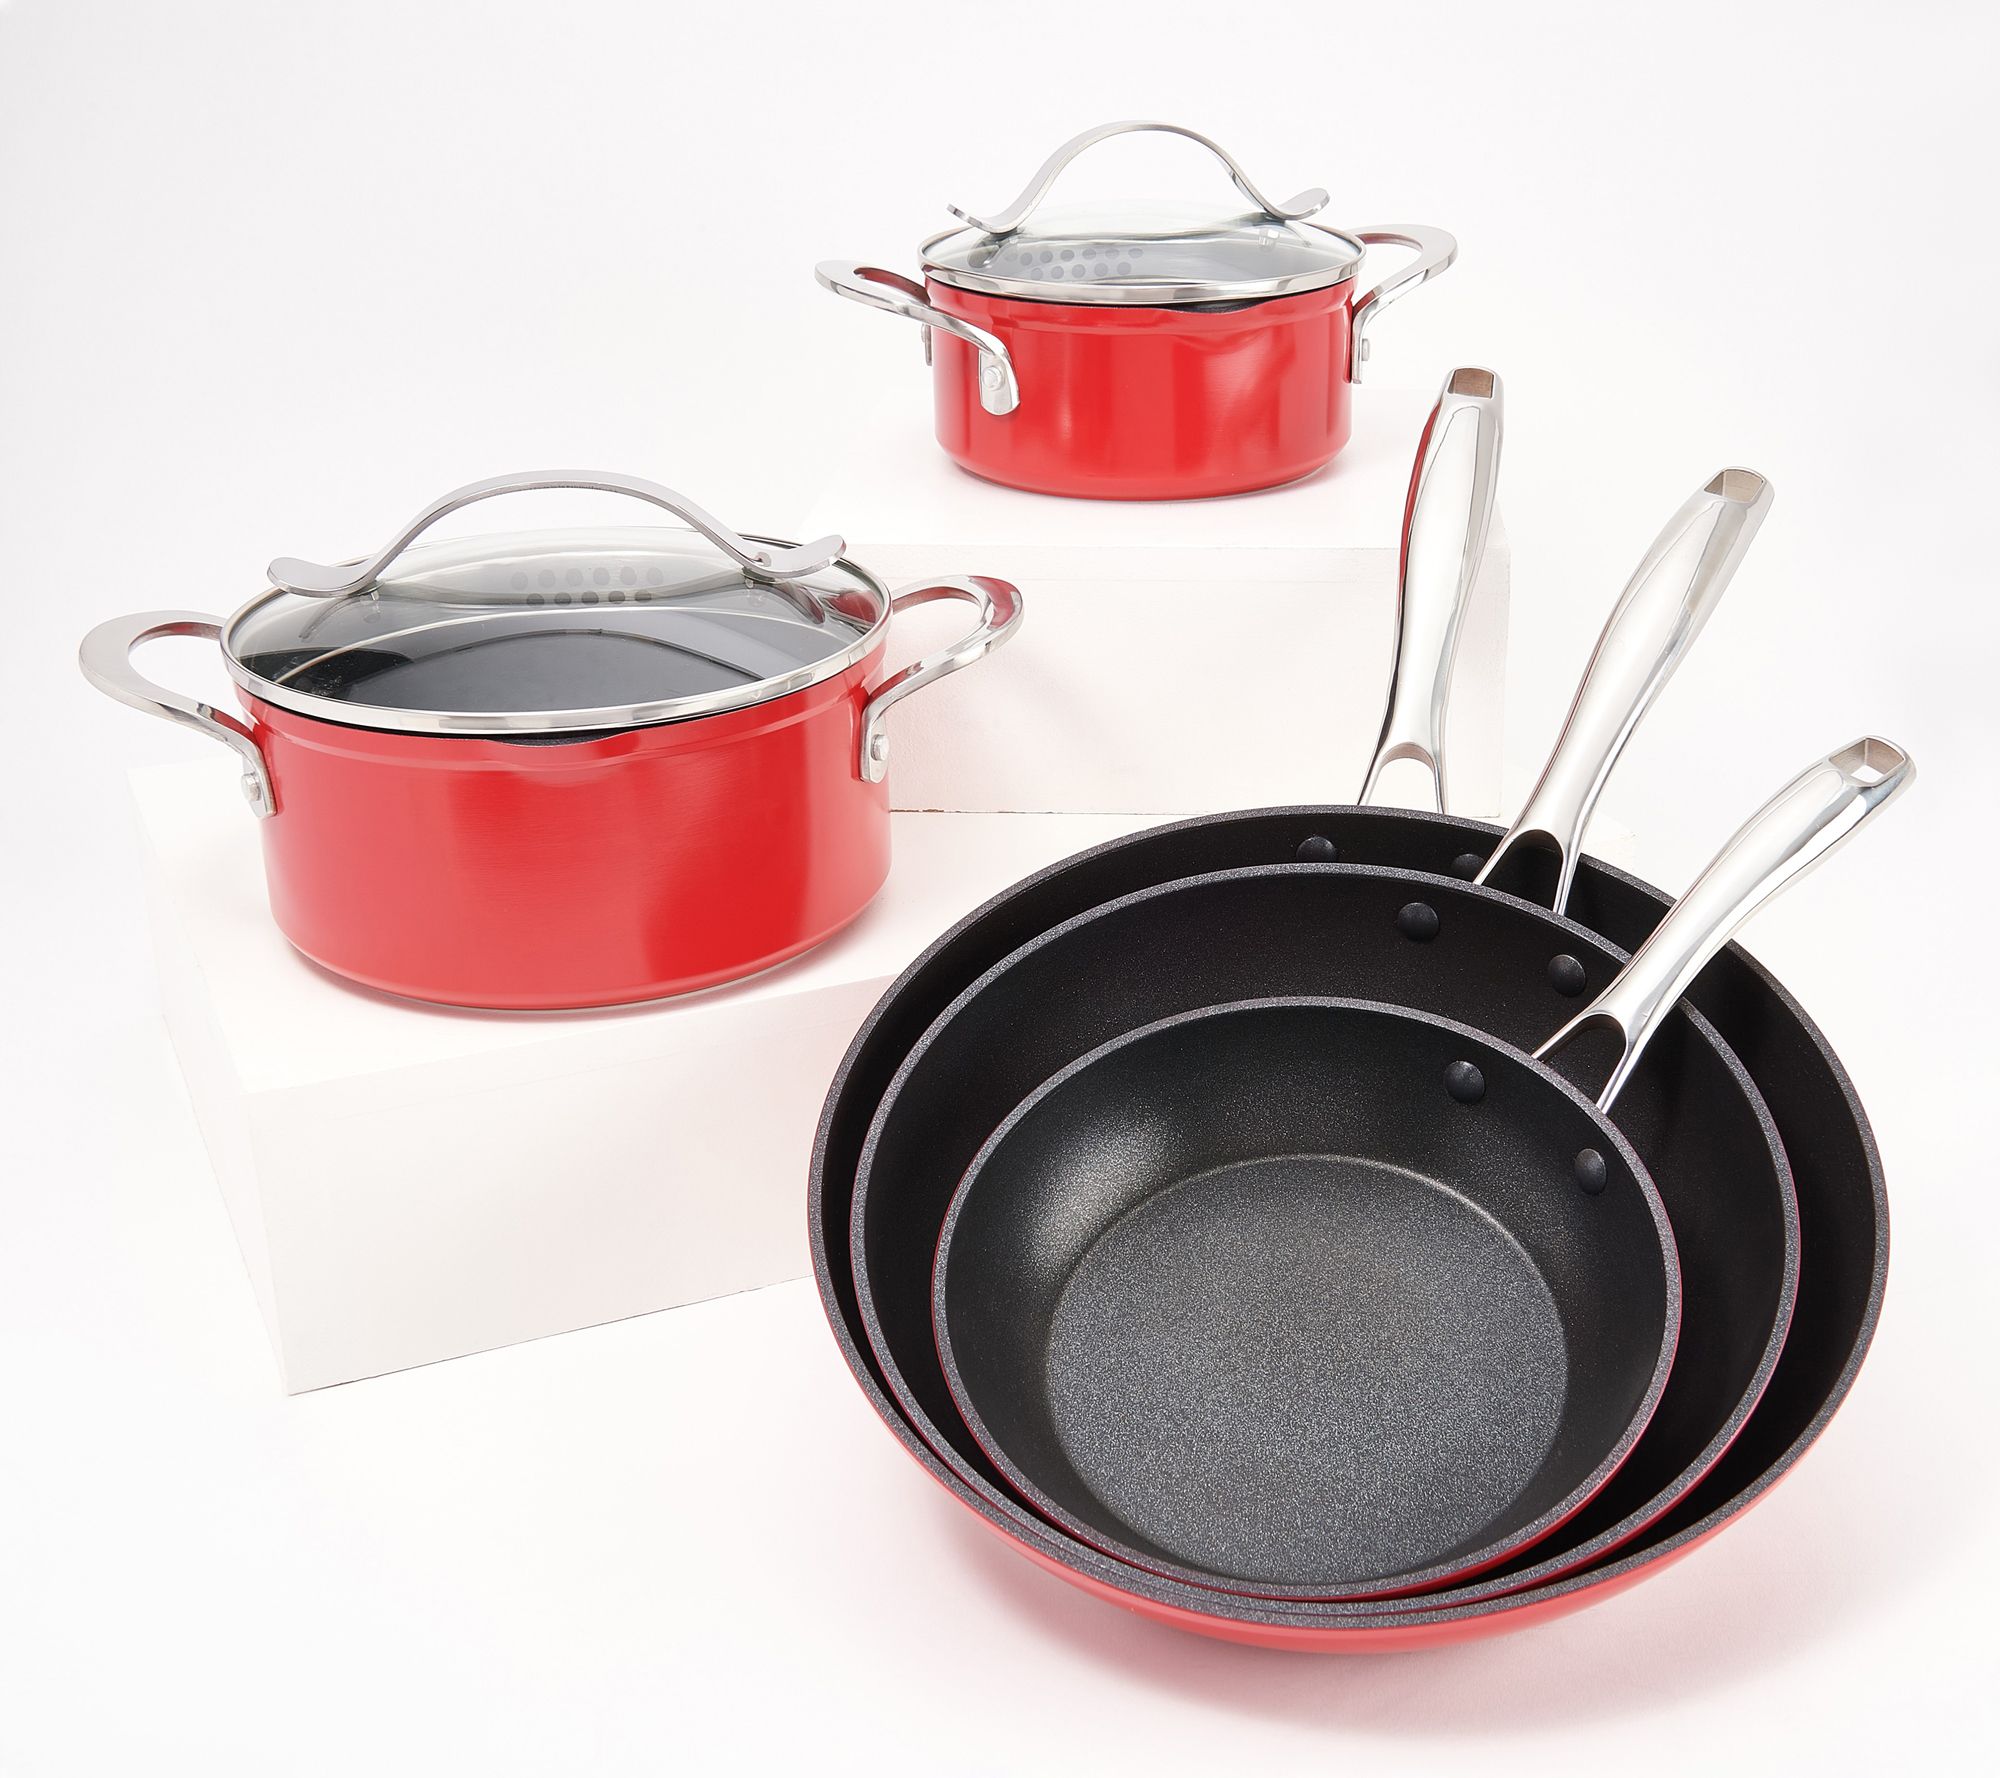 Cook's Essentials 7-Piece Forged Aluminum Cookware Set